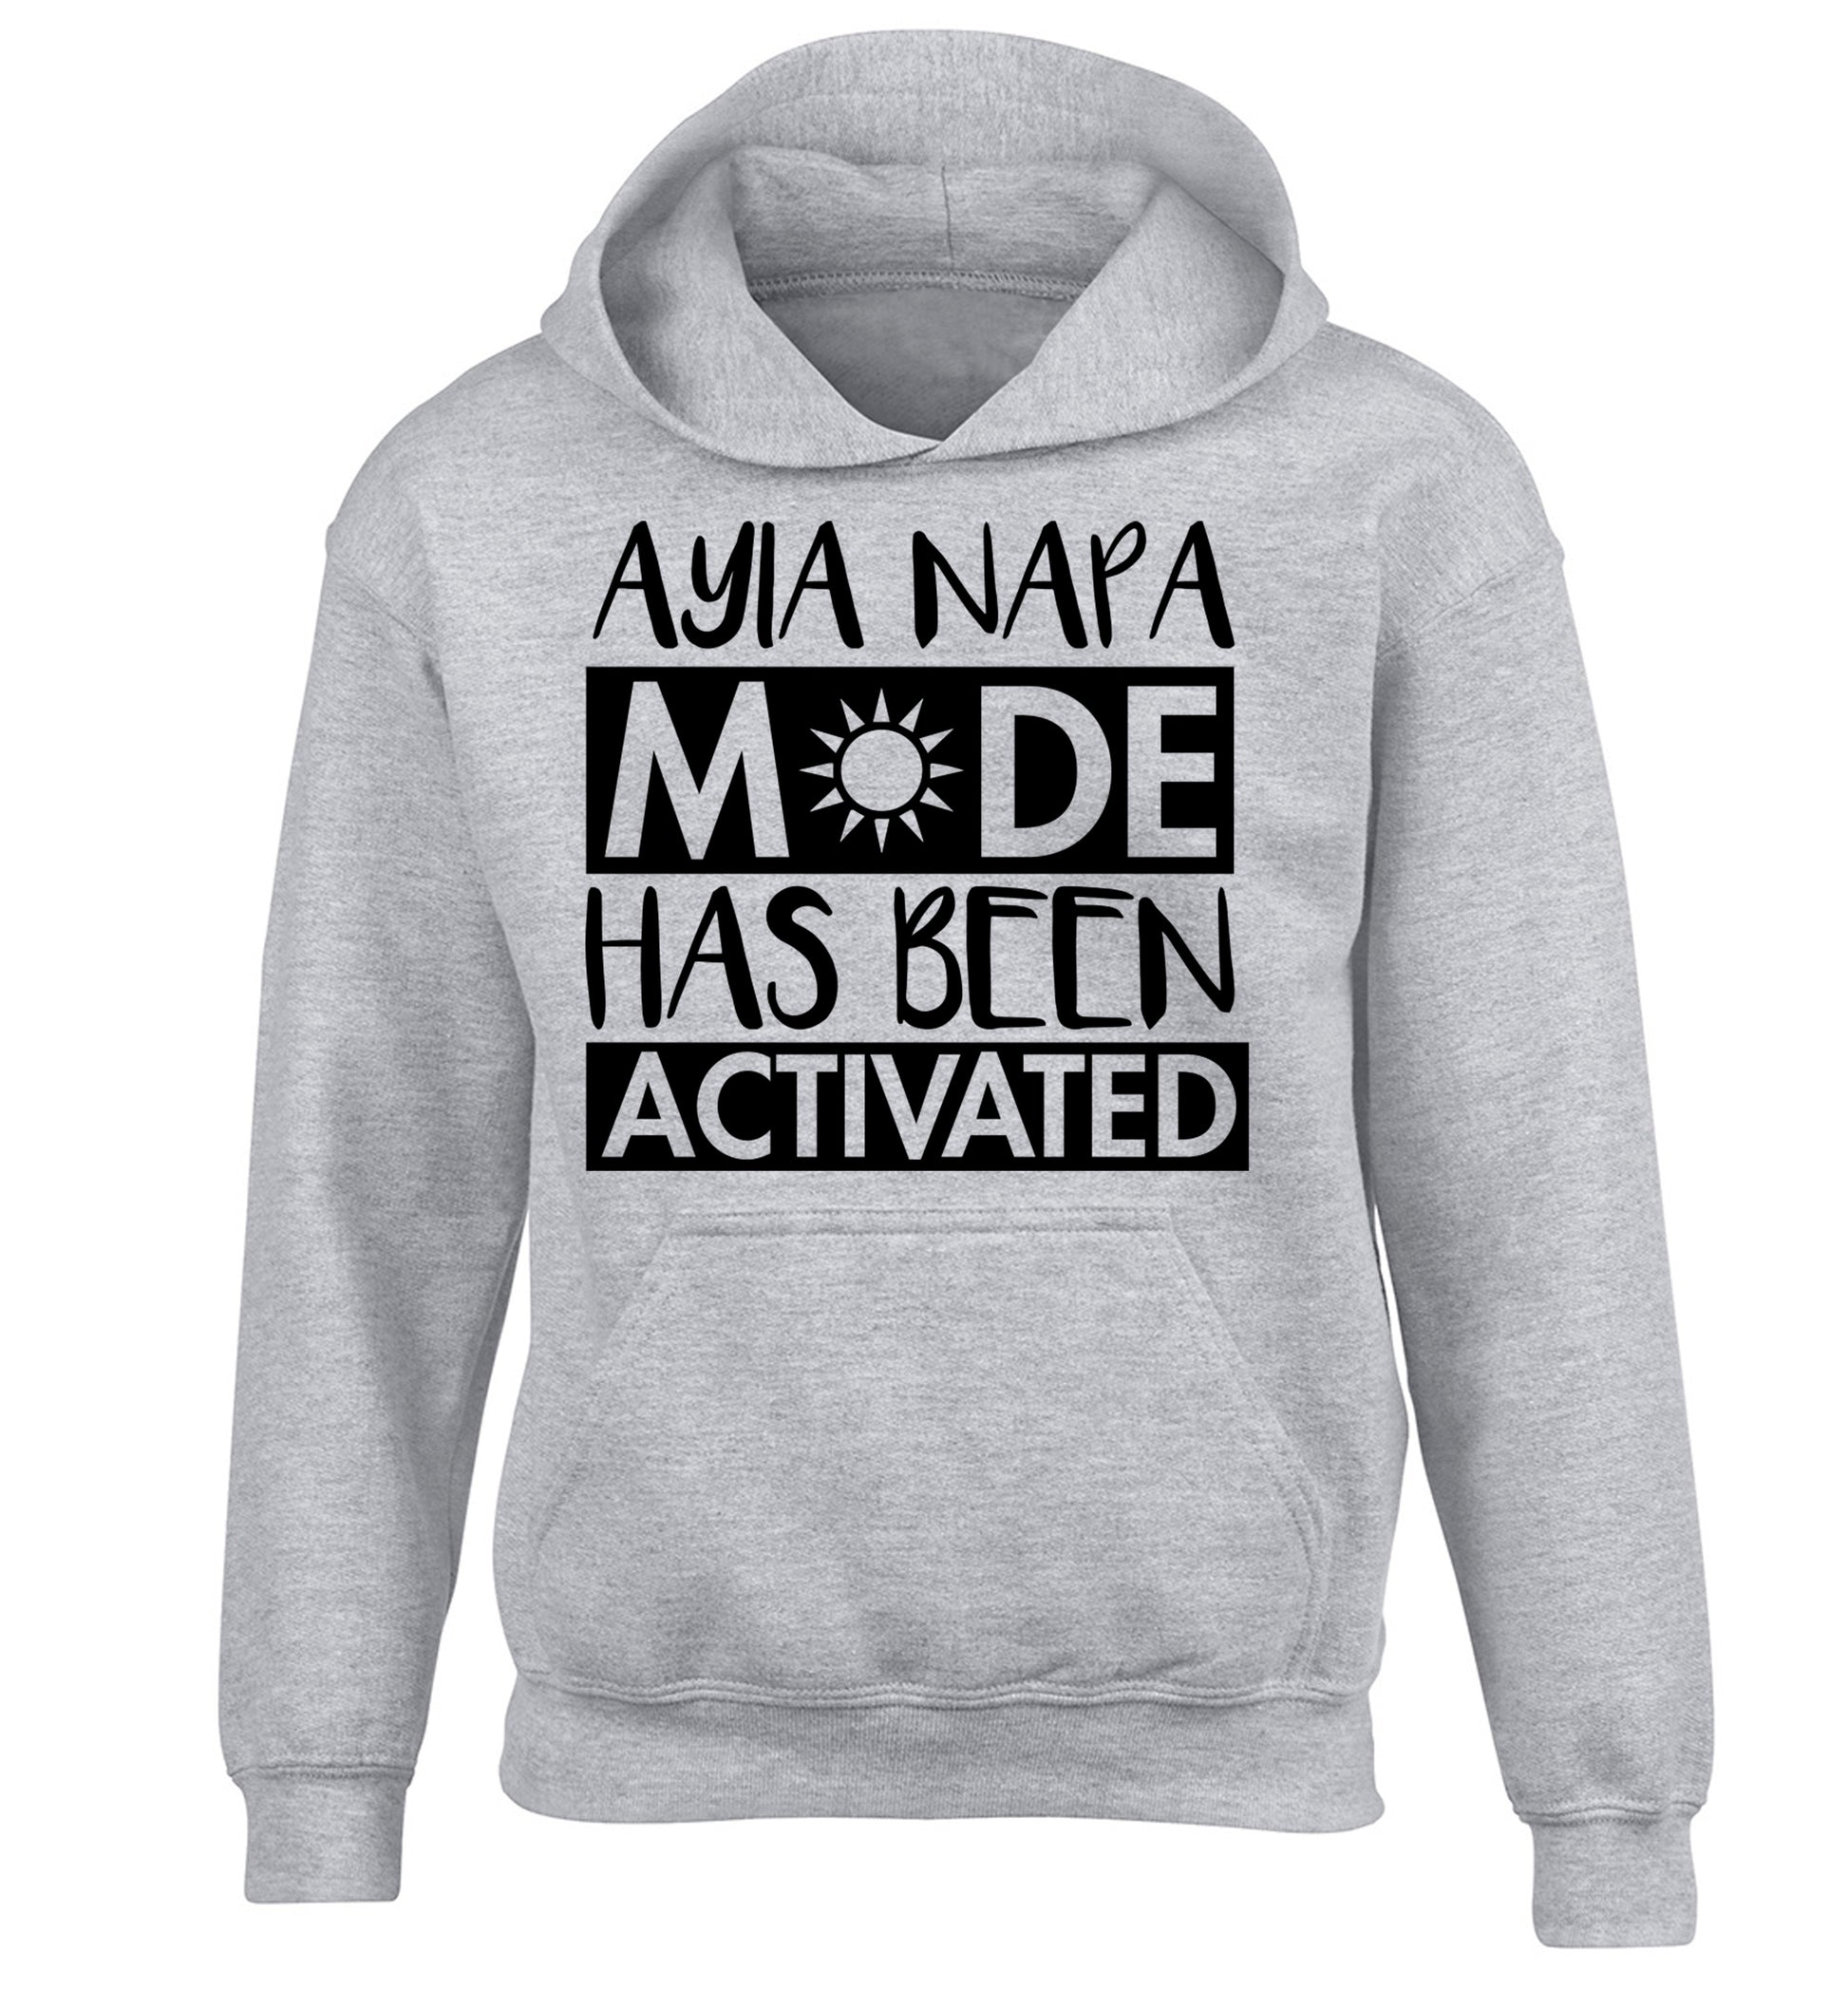 Ayia Napa mode has been activated children's grey hoodie 12-13 Years